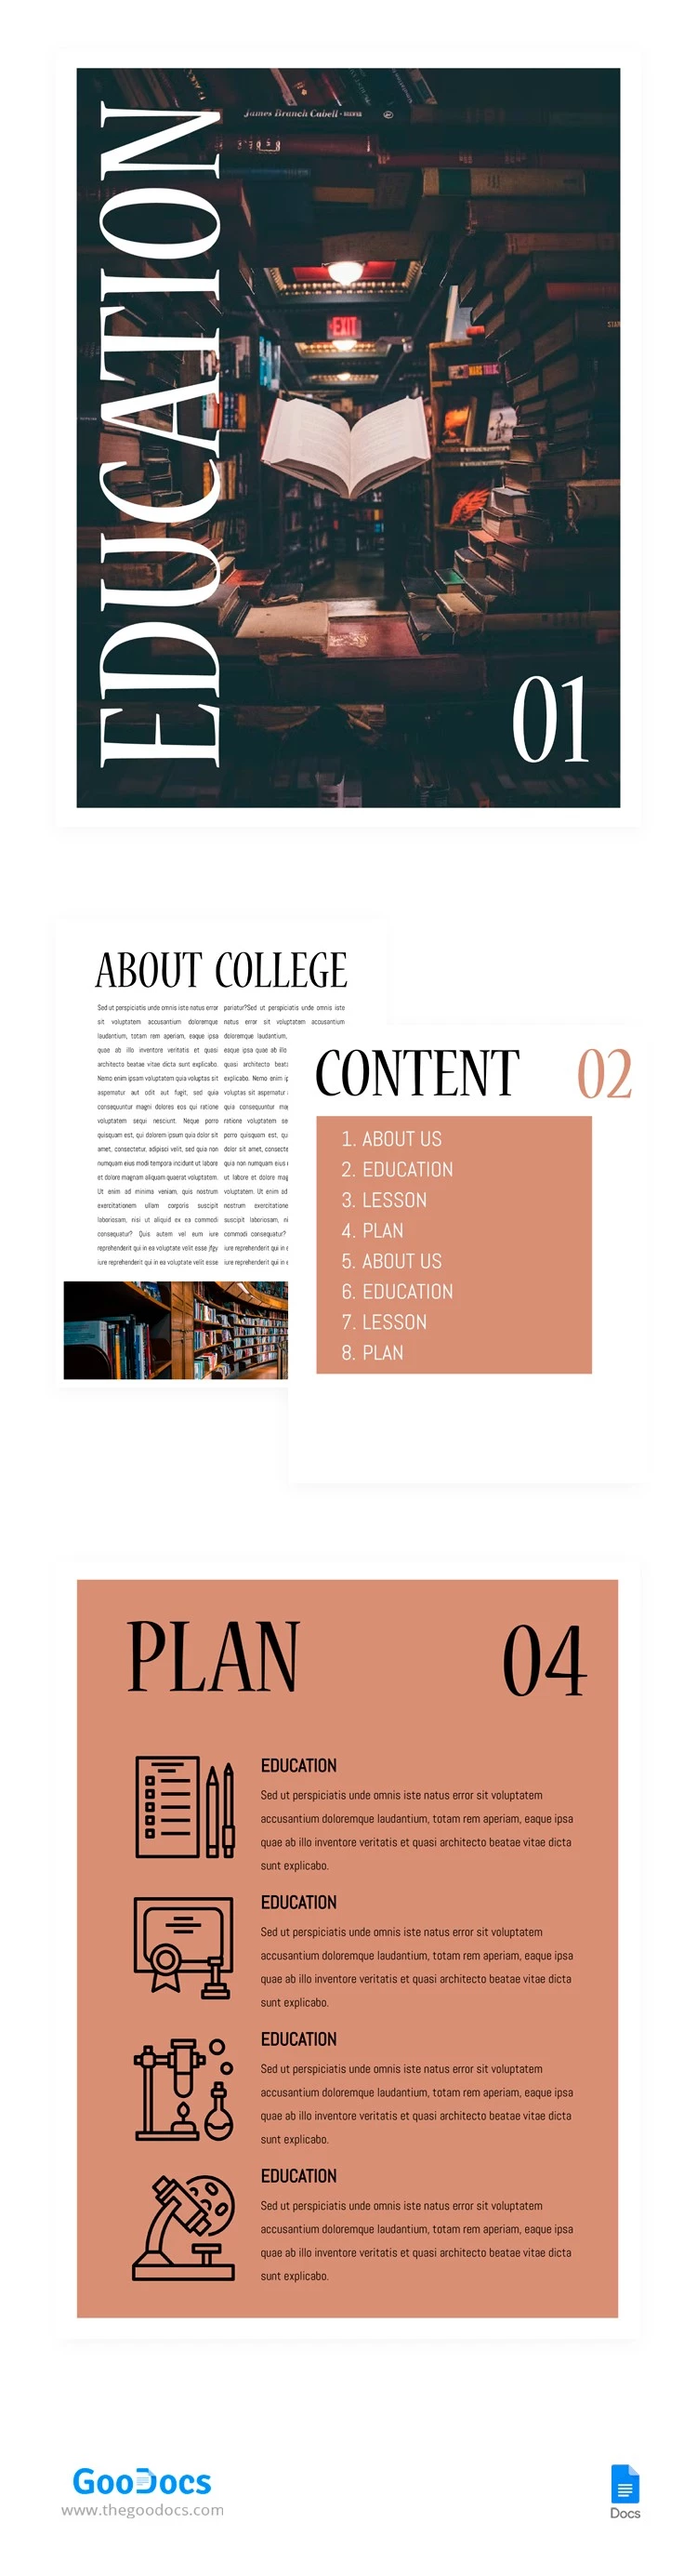 College Brochure - free Google Docs Template - 10065054